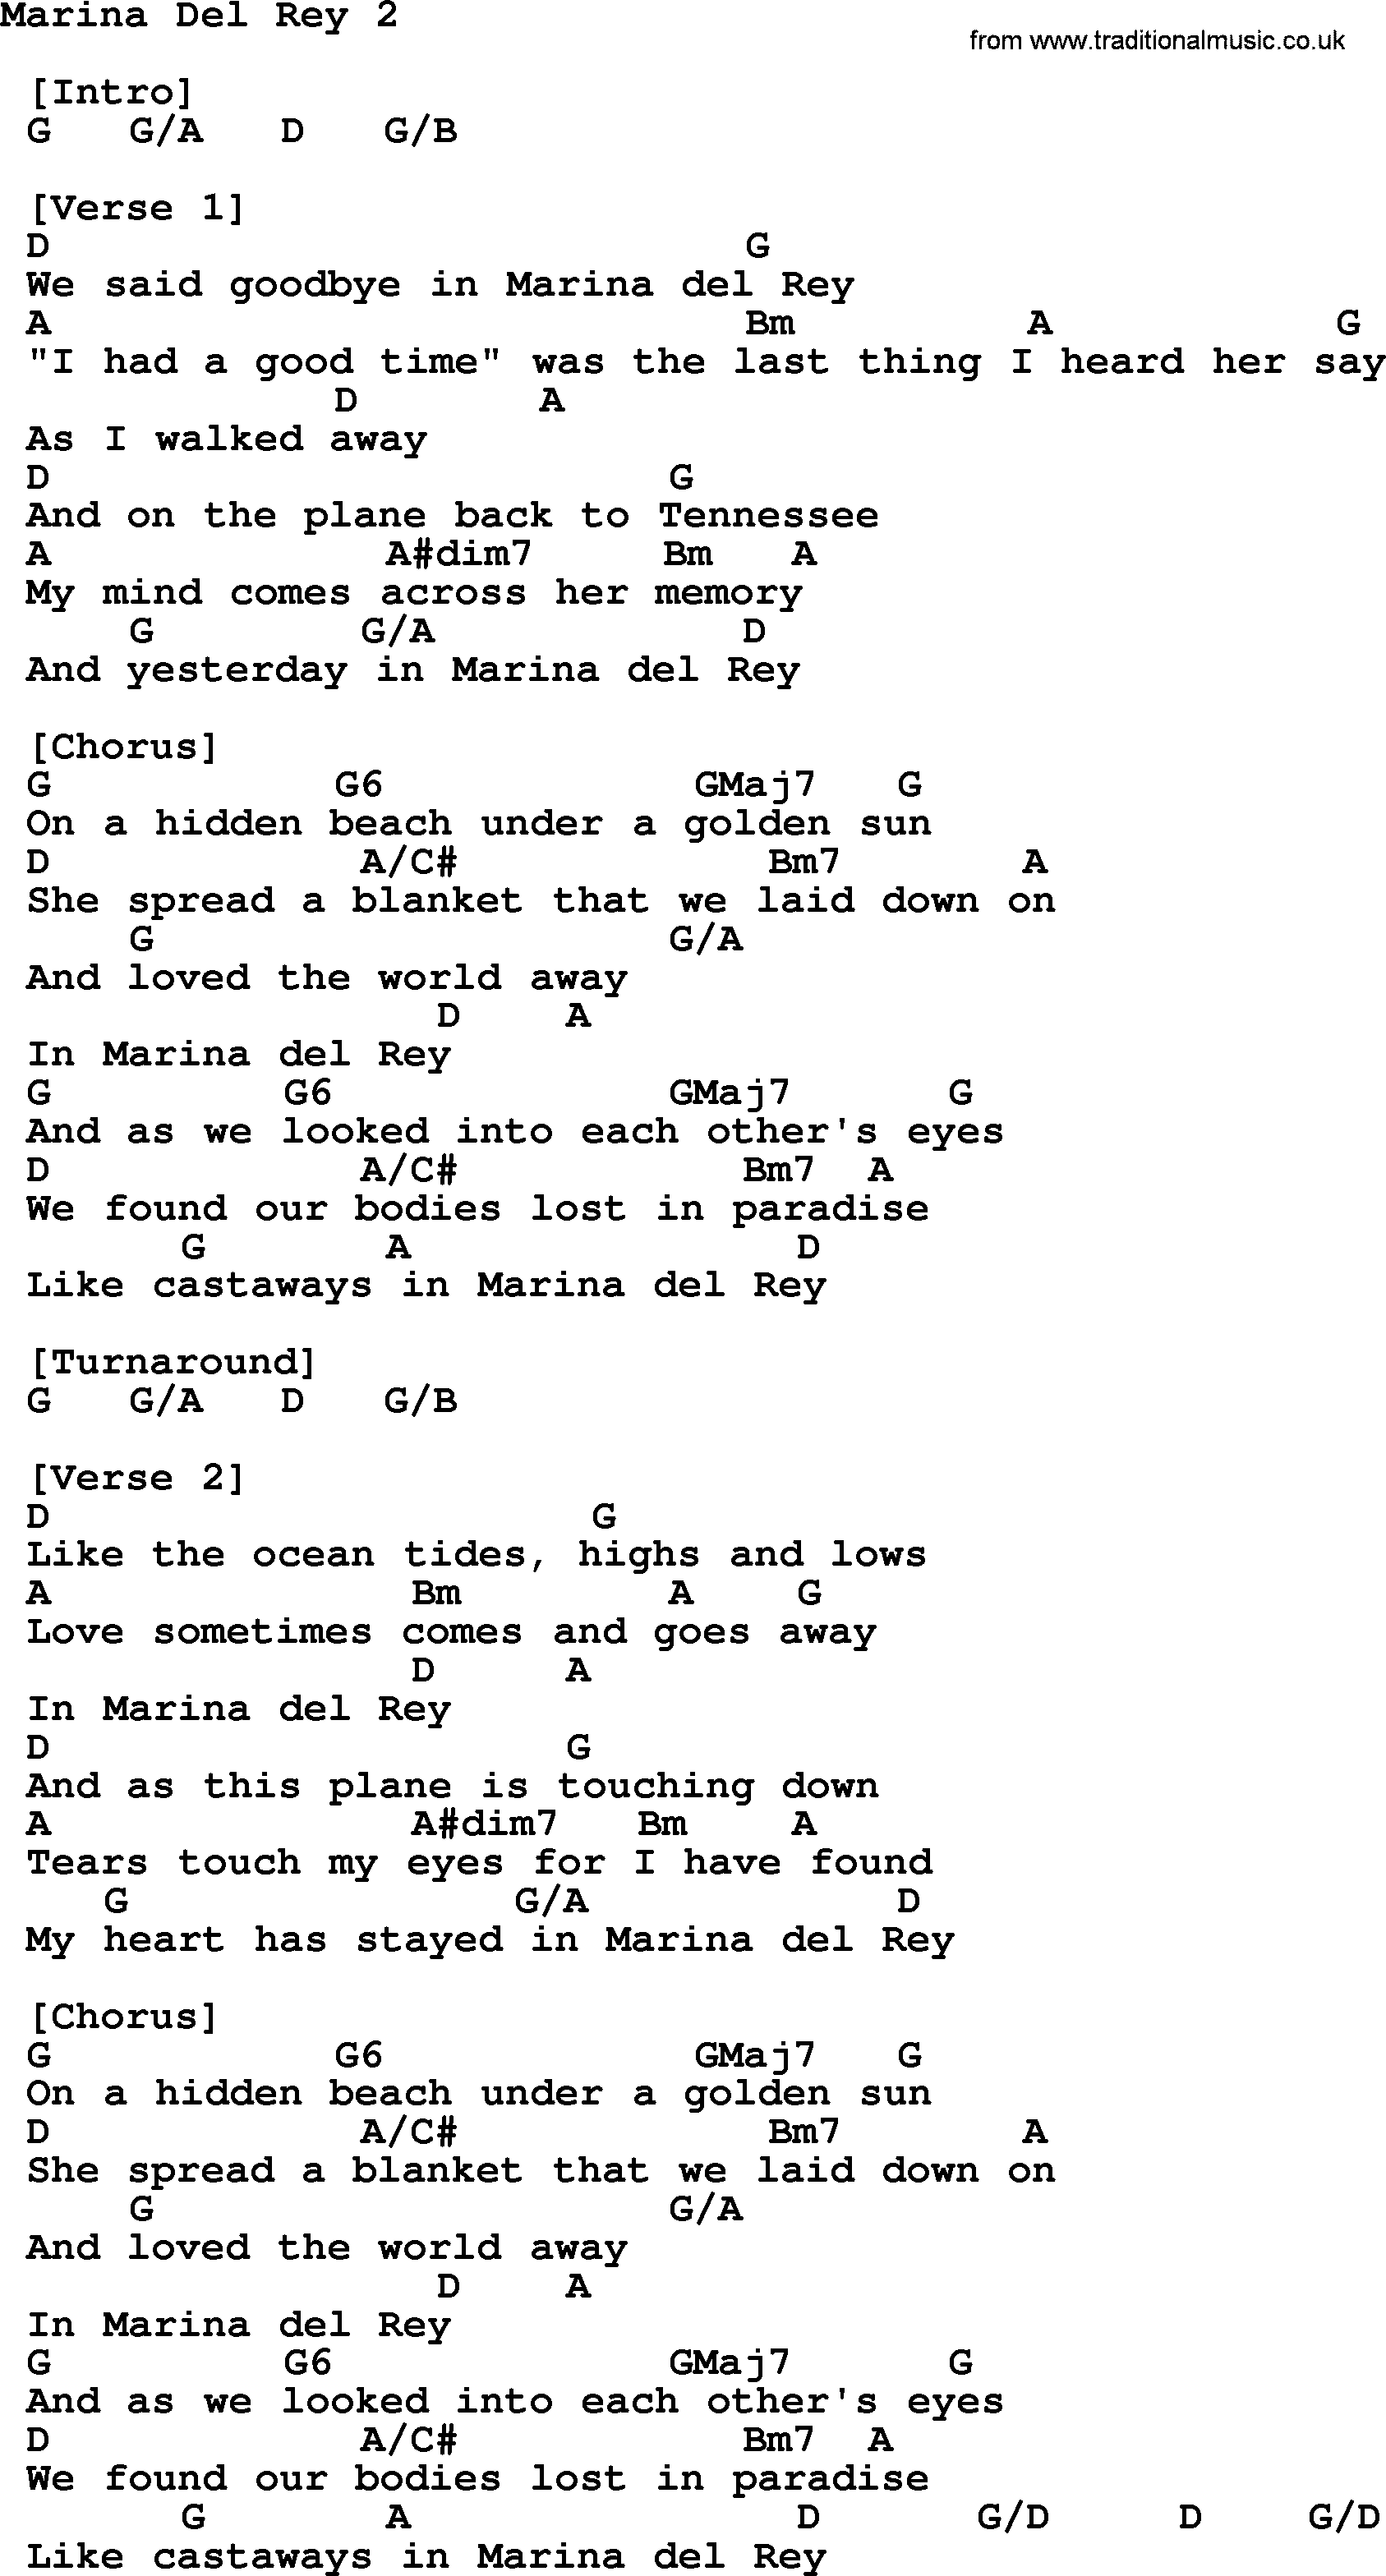 George Strait song: Marina Del Rey 2, lyrics and chords